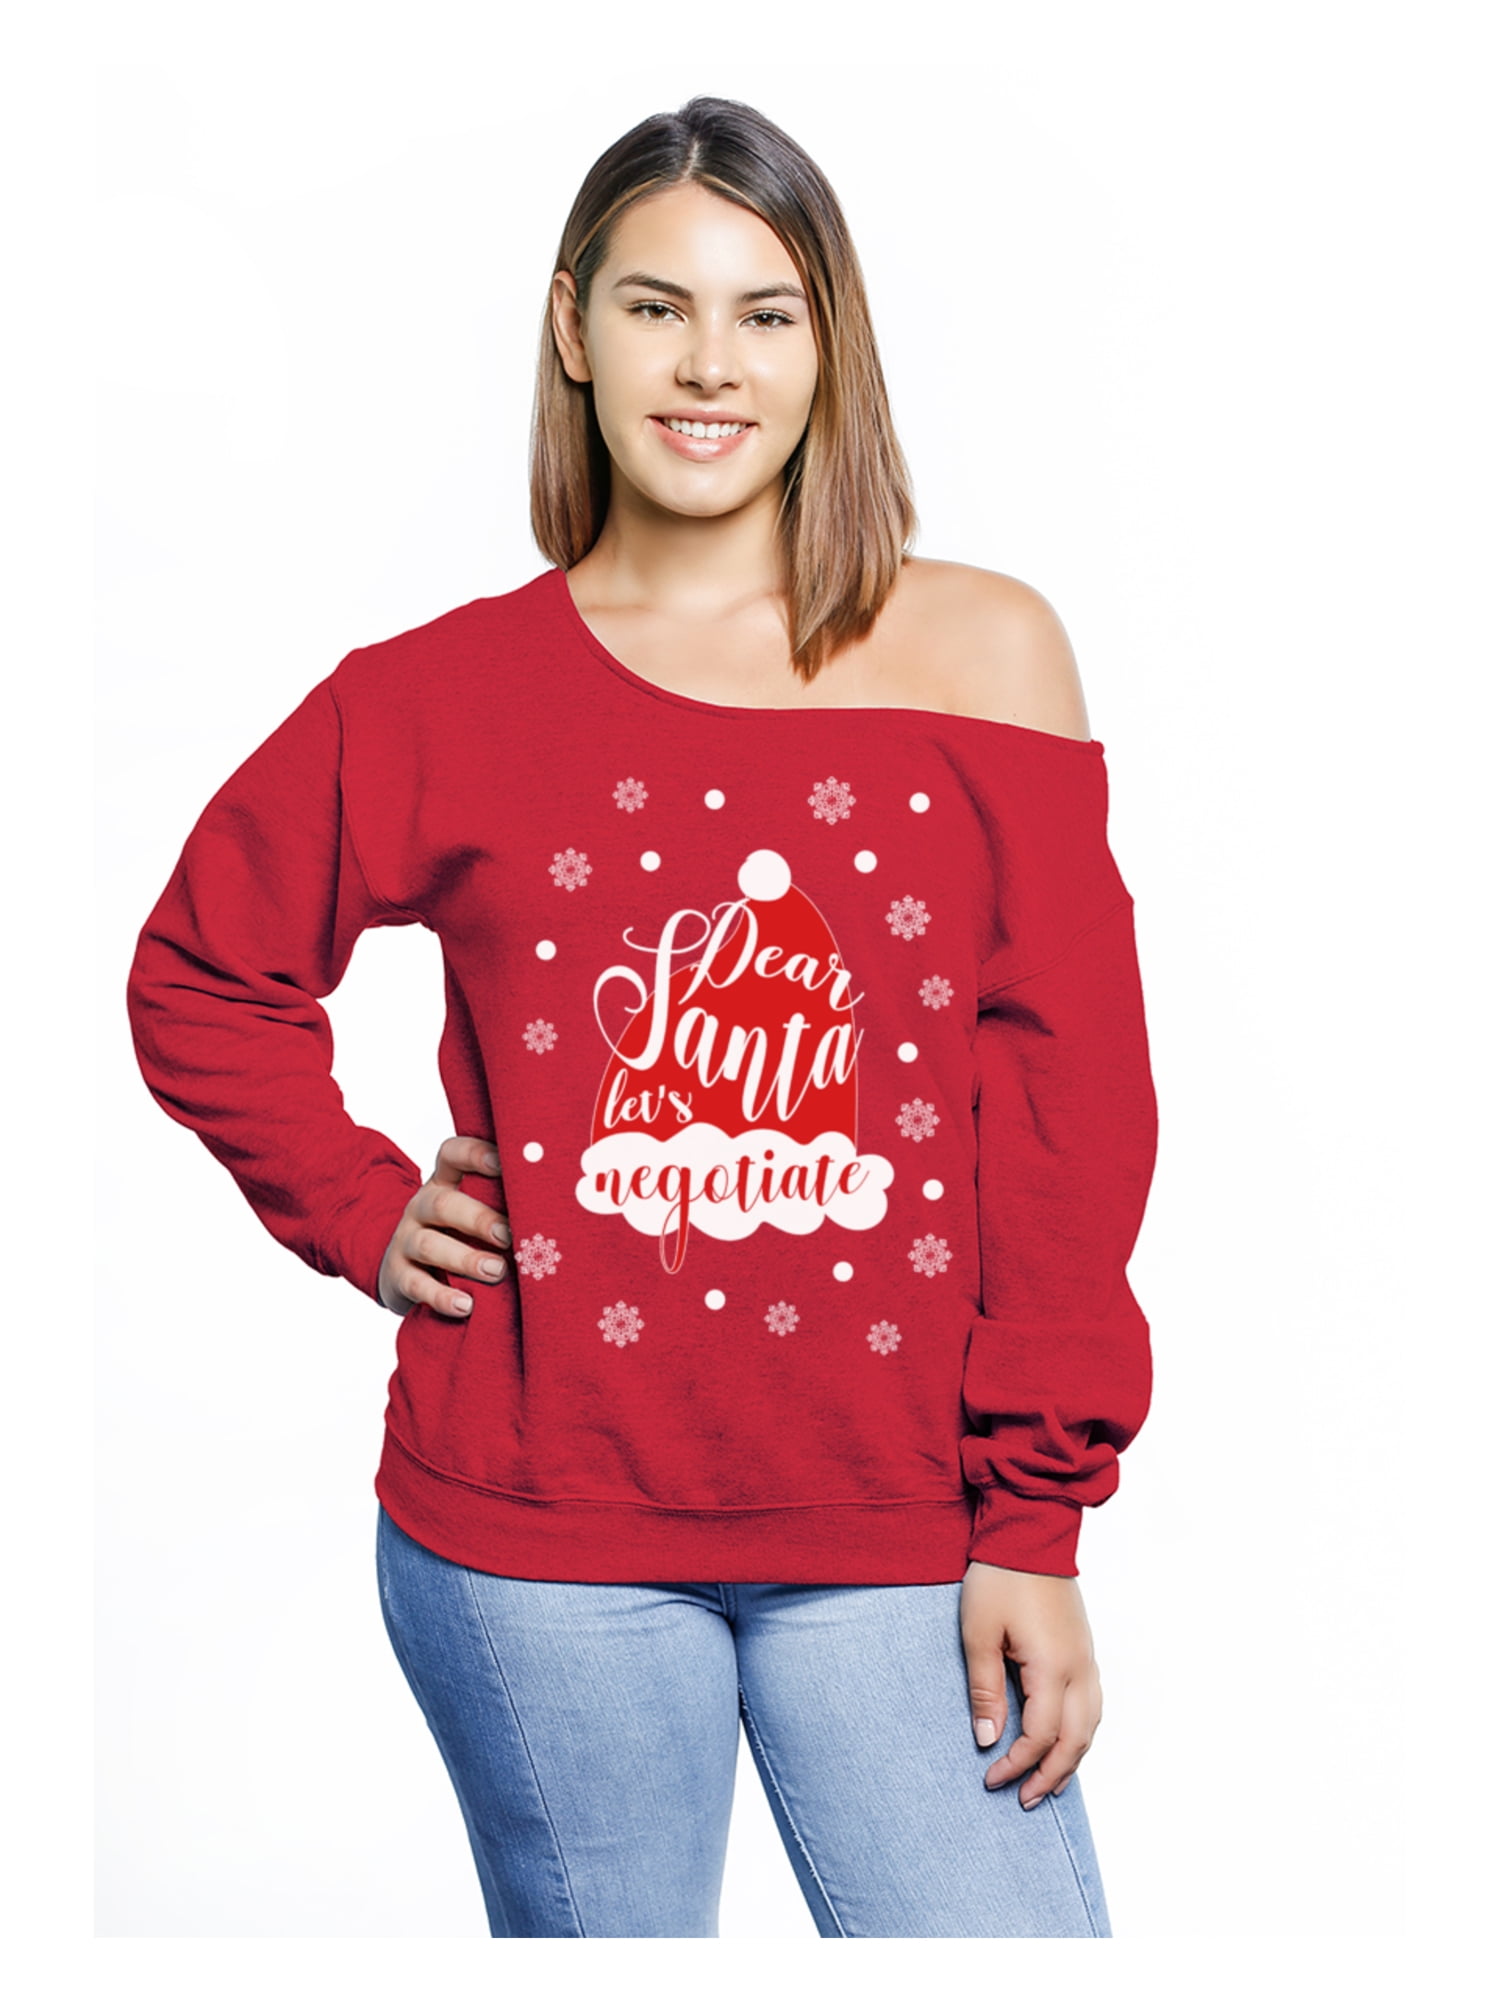 Dear Santa Let's Negotiate Christmas Sweatshirt Funny Santa Ugly Christmas Sweater Christmas Gifts.